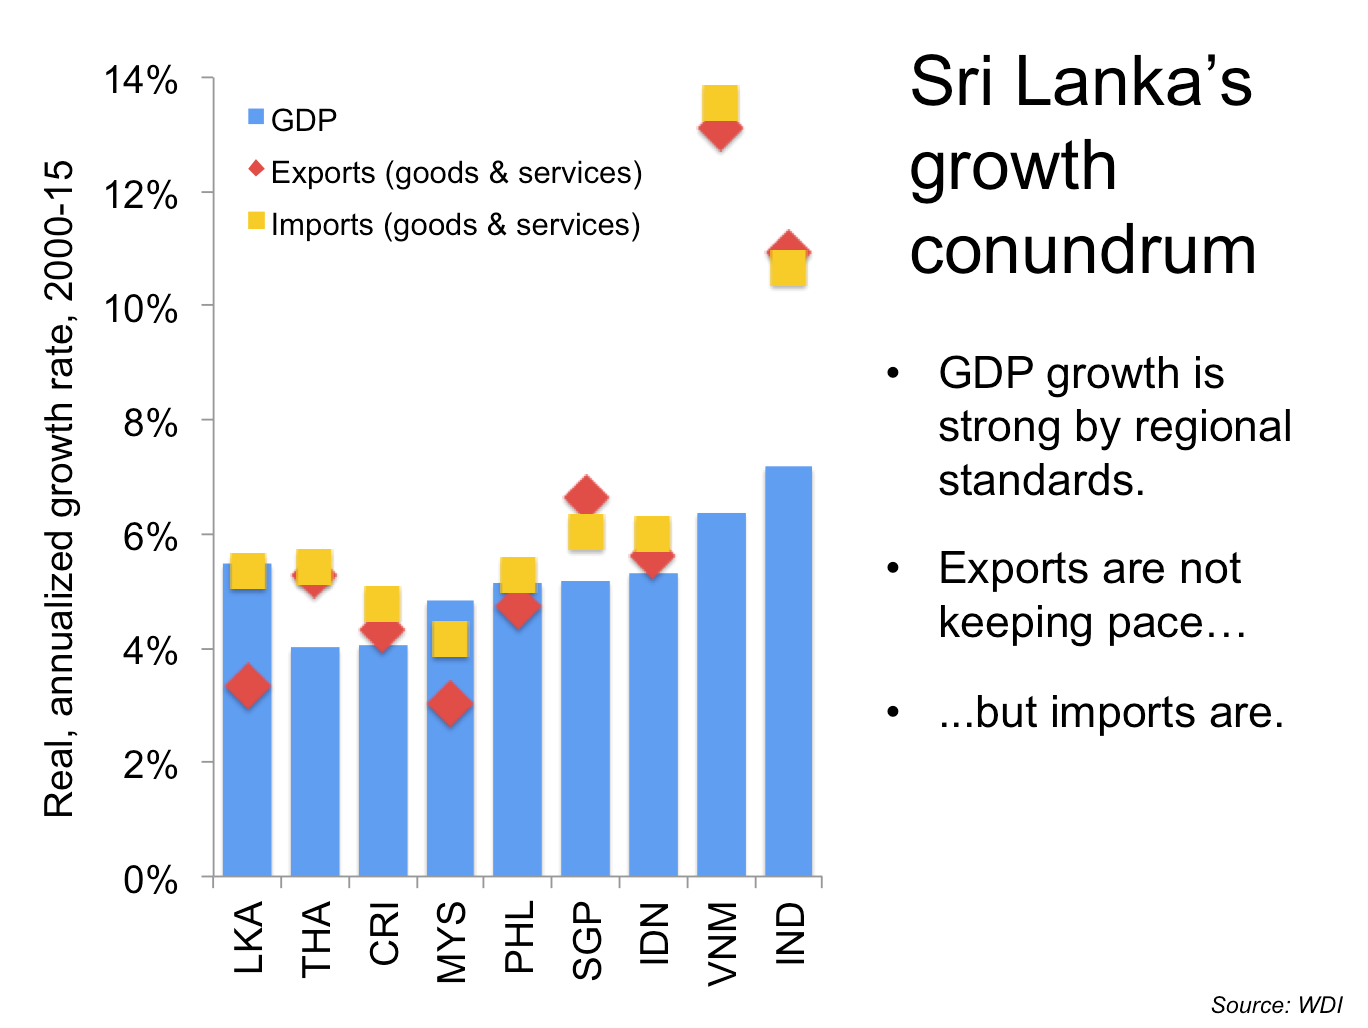 Sri Lanka's Growth Conundrum